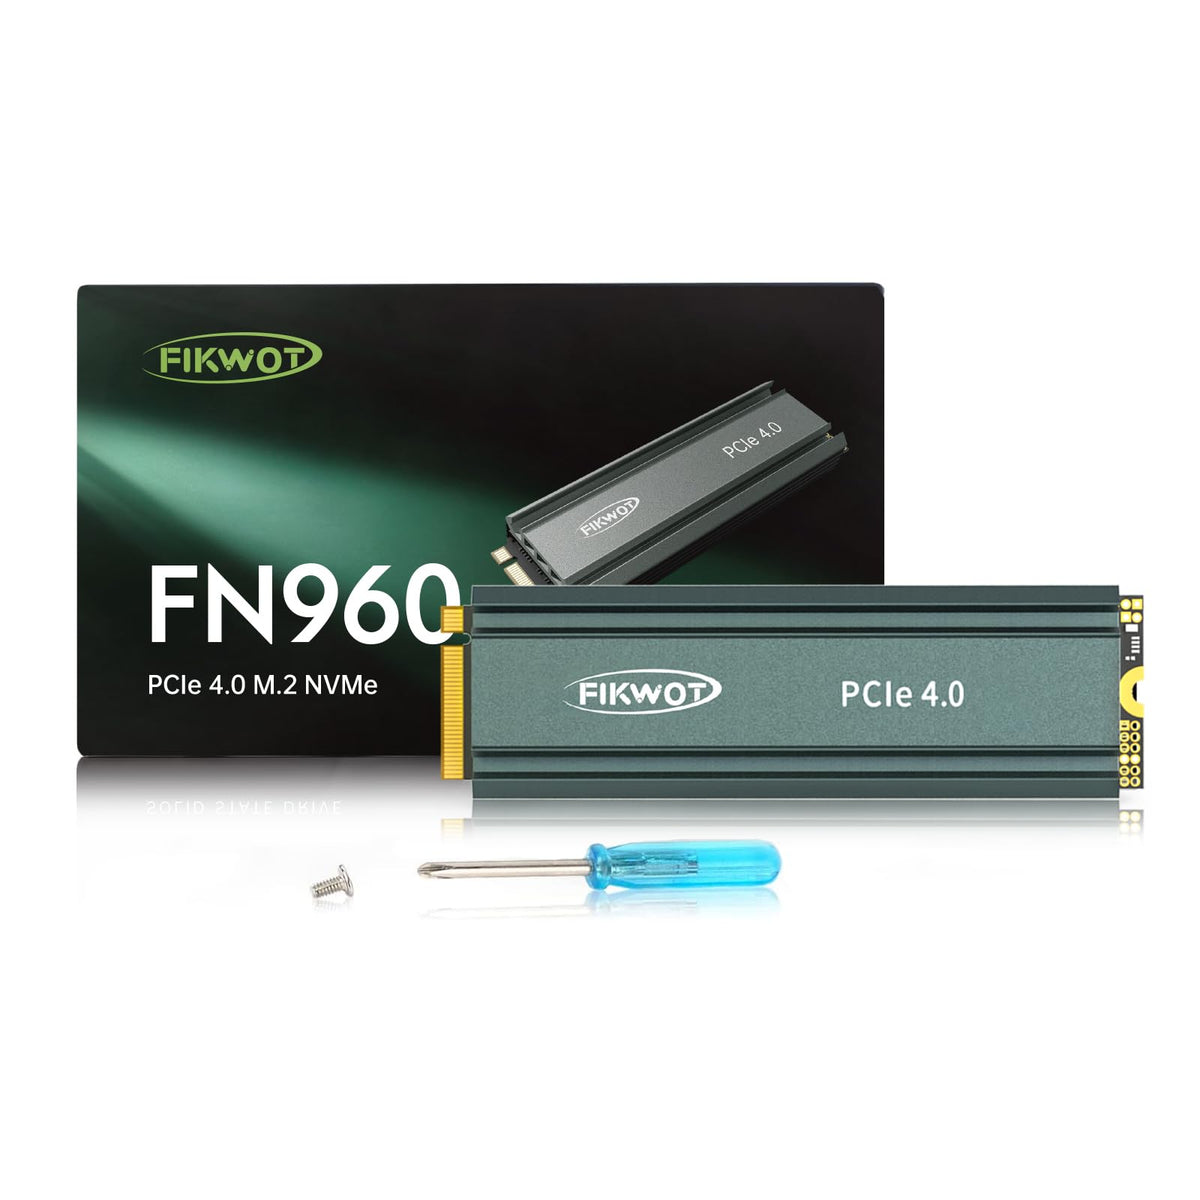 Fikwot FN960 M.2 2280 SSD PCIe Gen4 x4